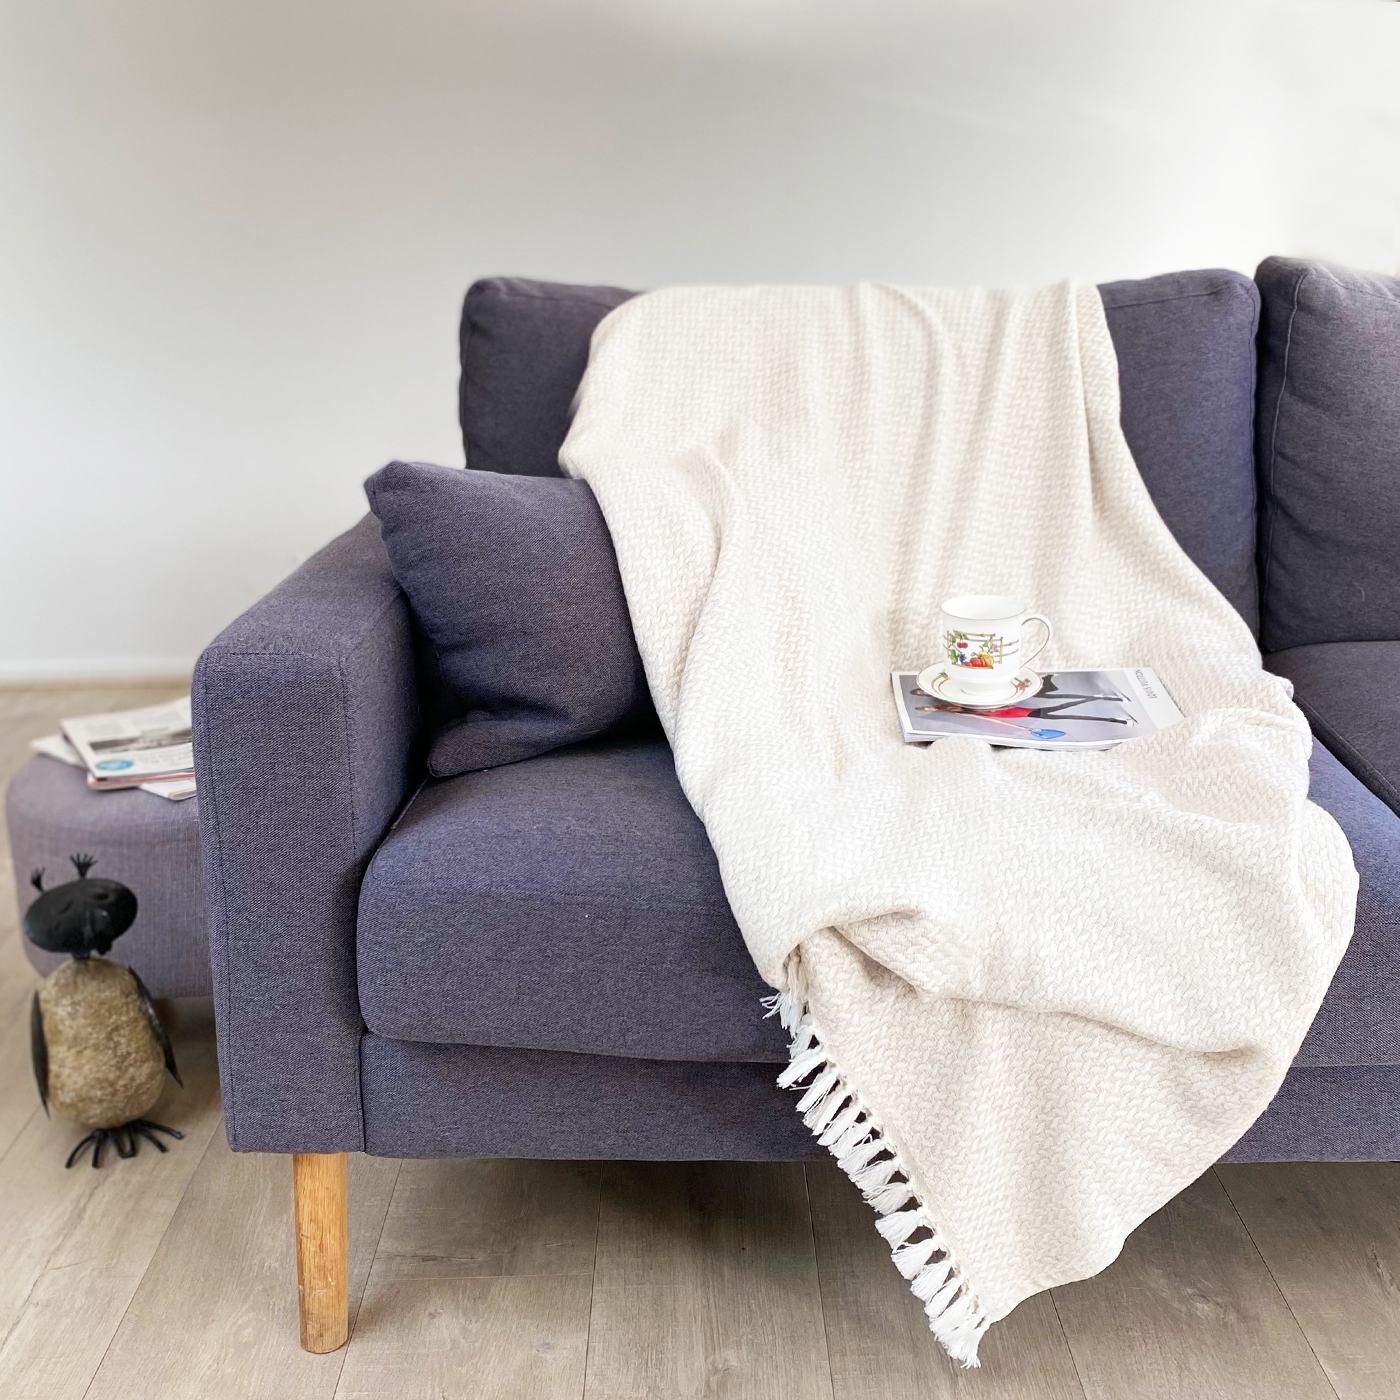 Plaid comfort cashmere e lana, motivo chevron piccolo avorio - 130 x 230 cm